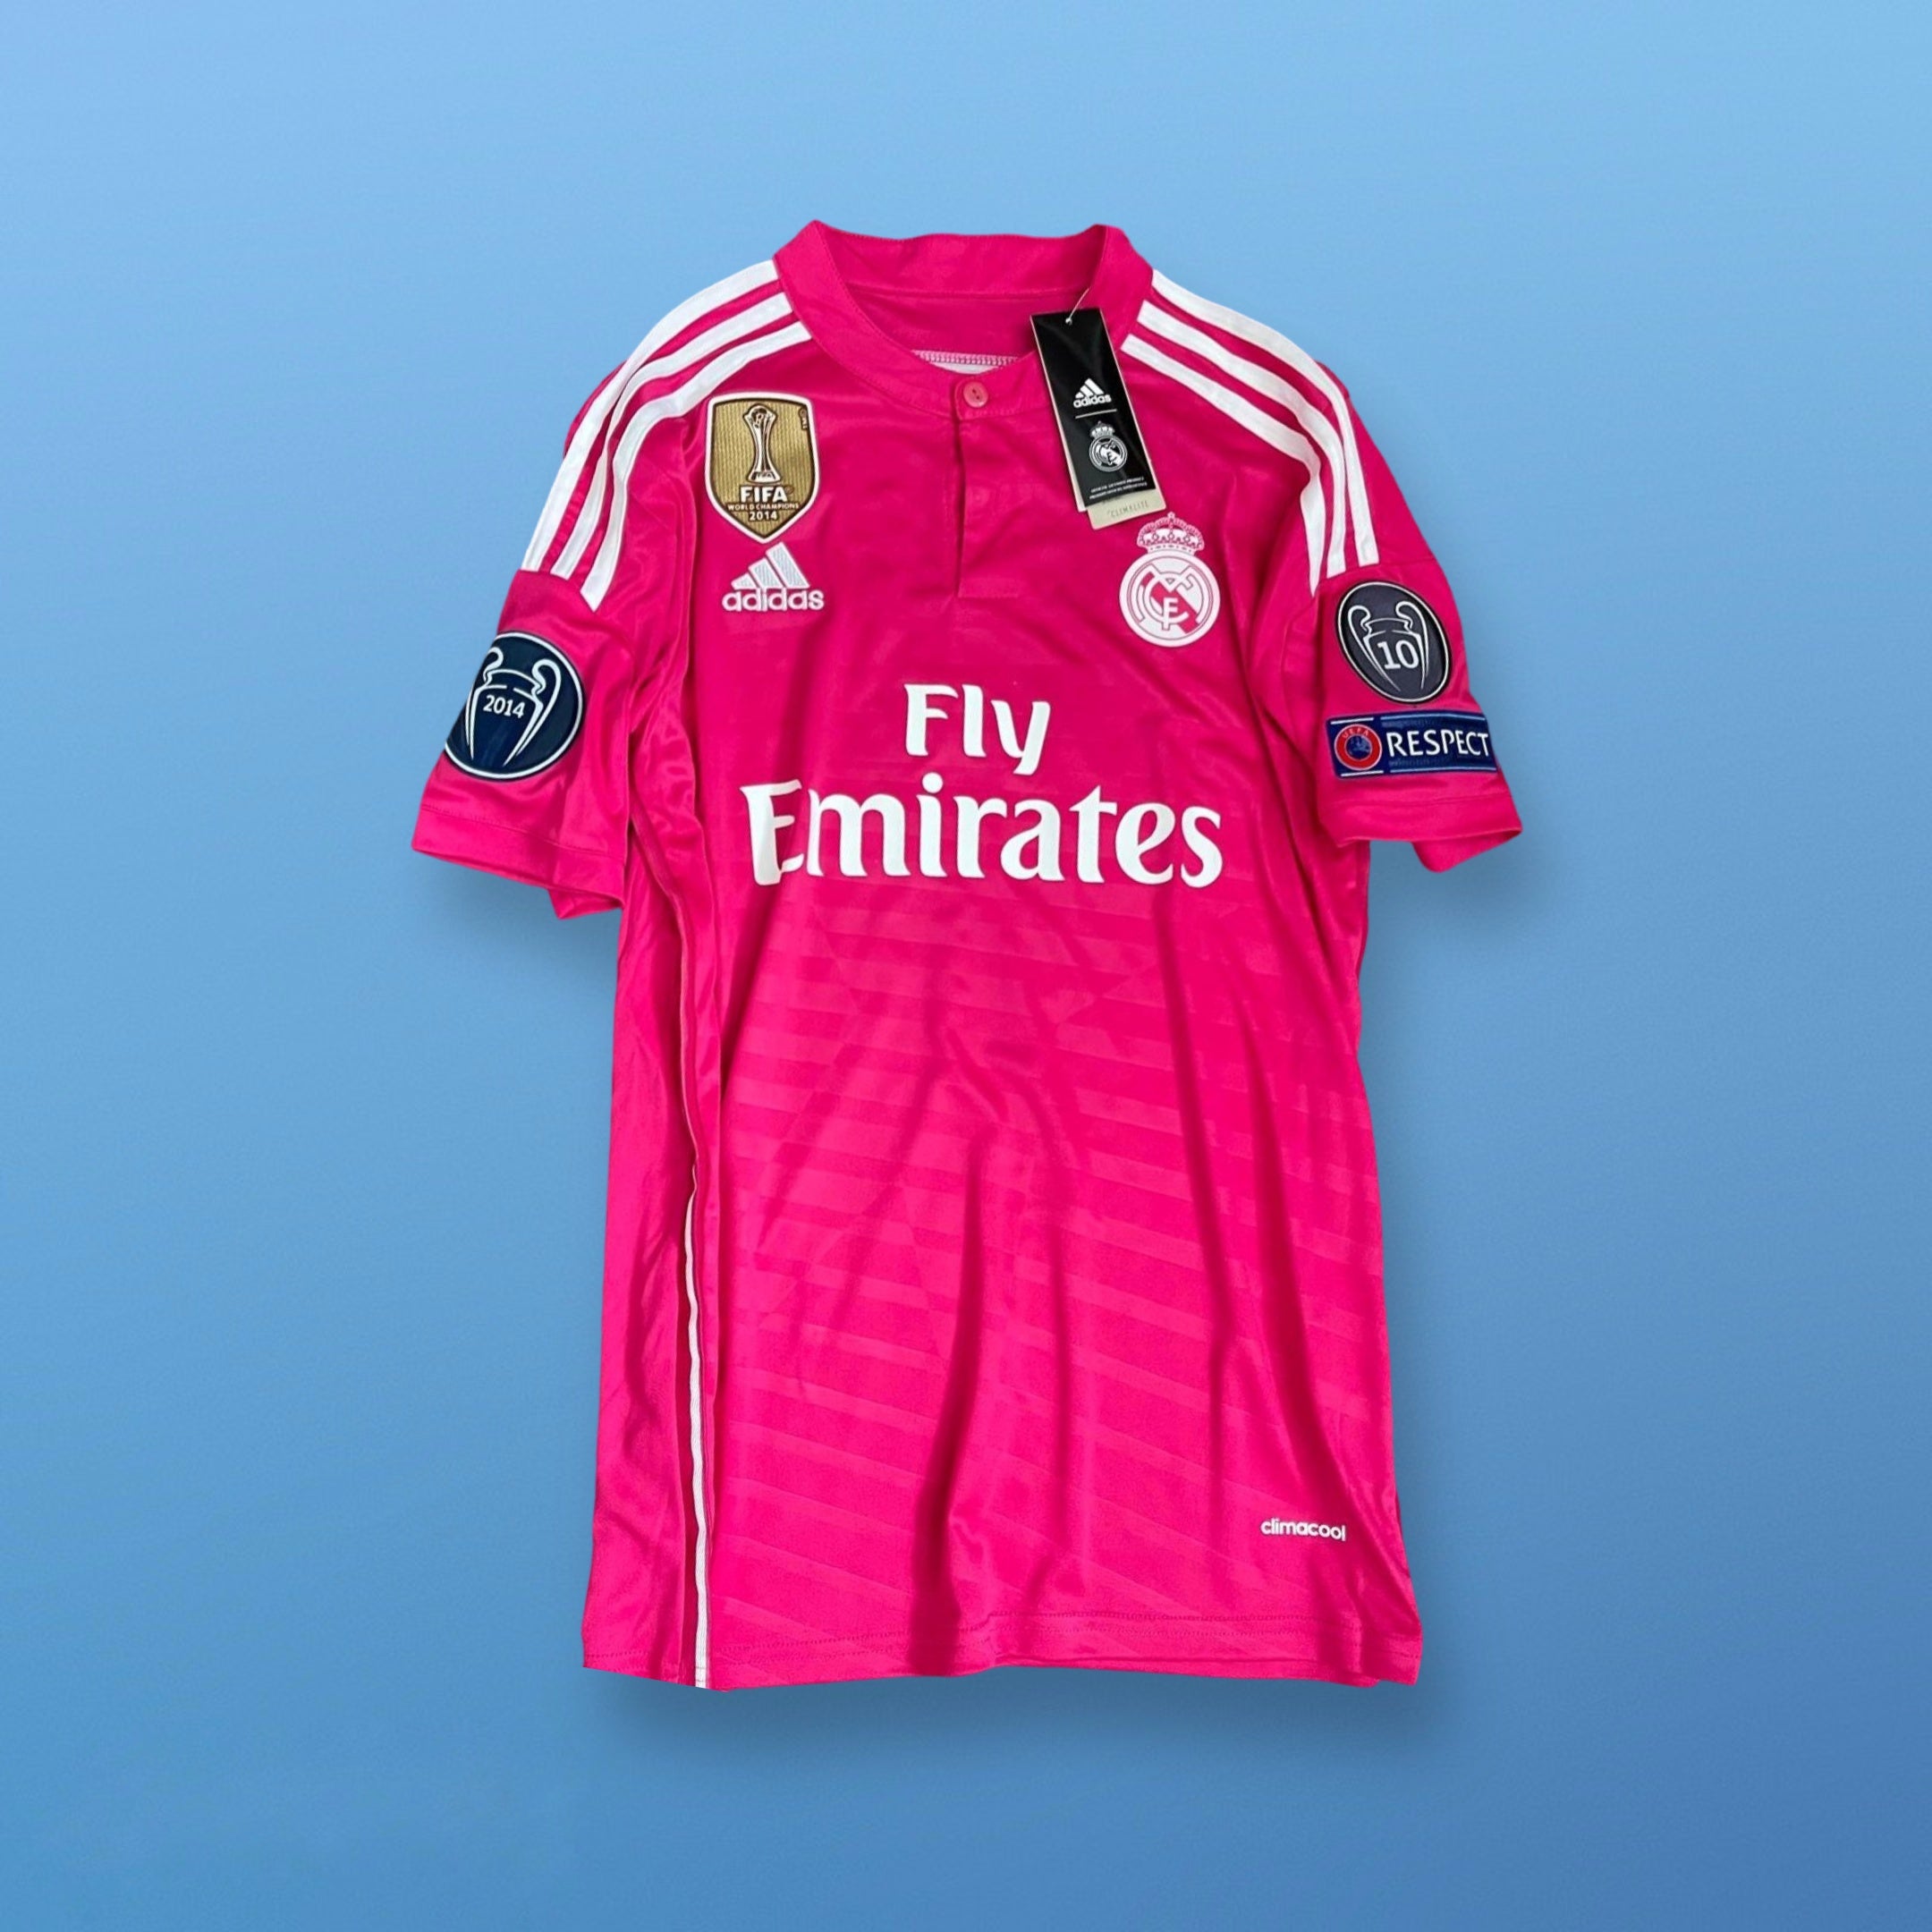 Real Madrid Retro Pink